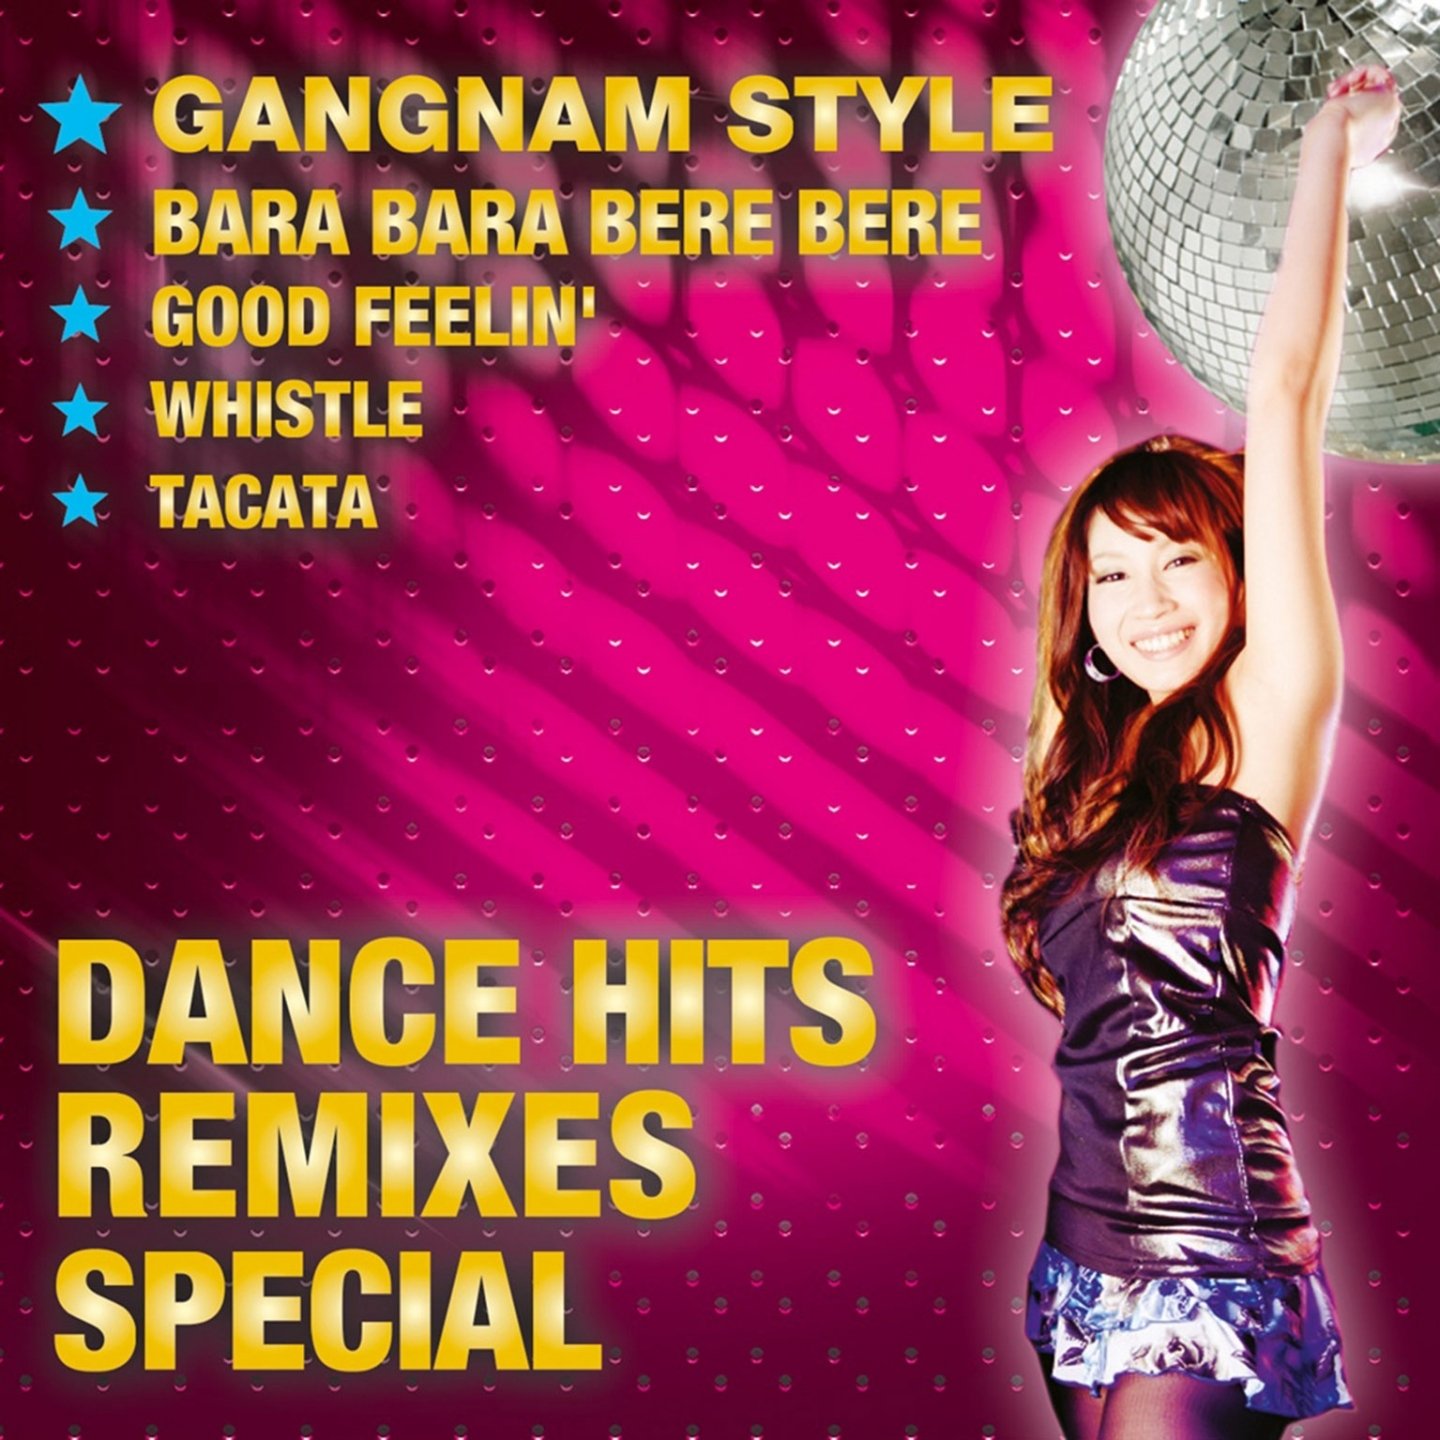 Песни на звонки телефона ремикс. Обложки альбомов Dance Hits. Бара бара бара бере бере бере. Dance Hits and Remixes (Special Edition) сборник 2001. DJ Tacata.